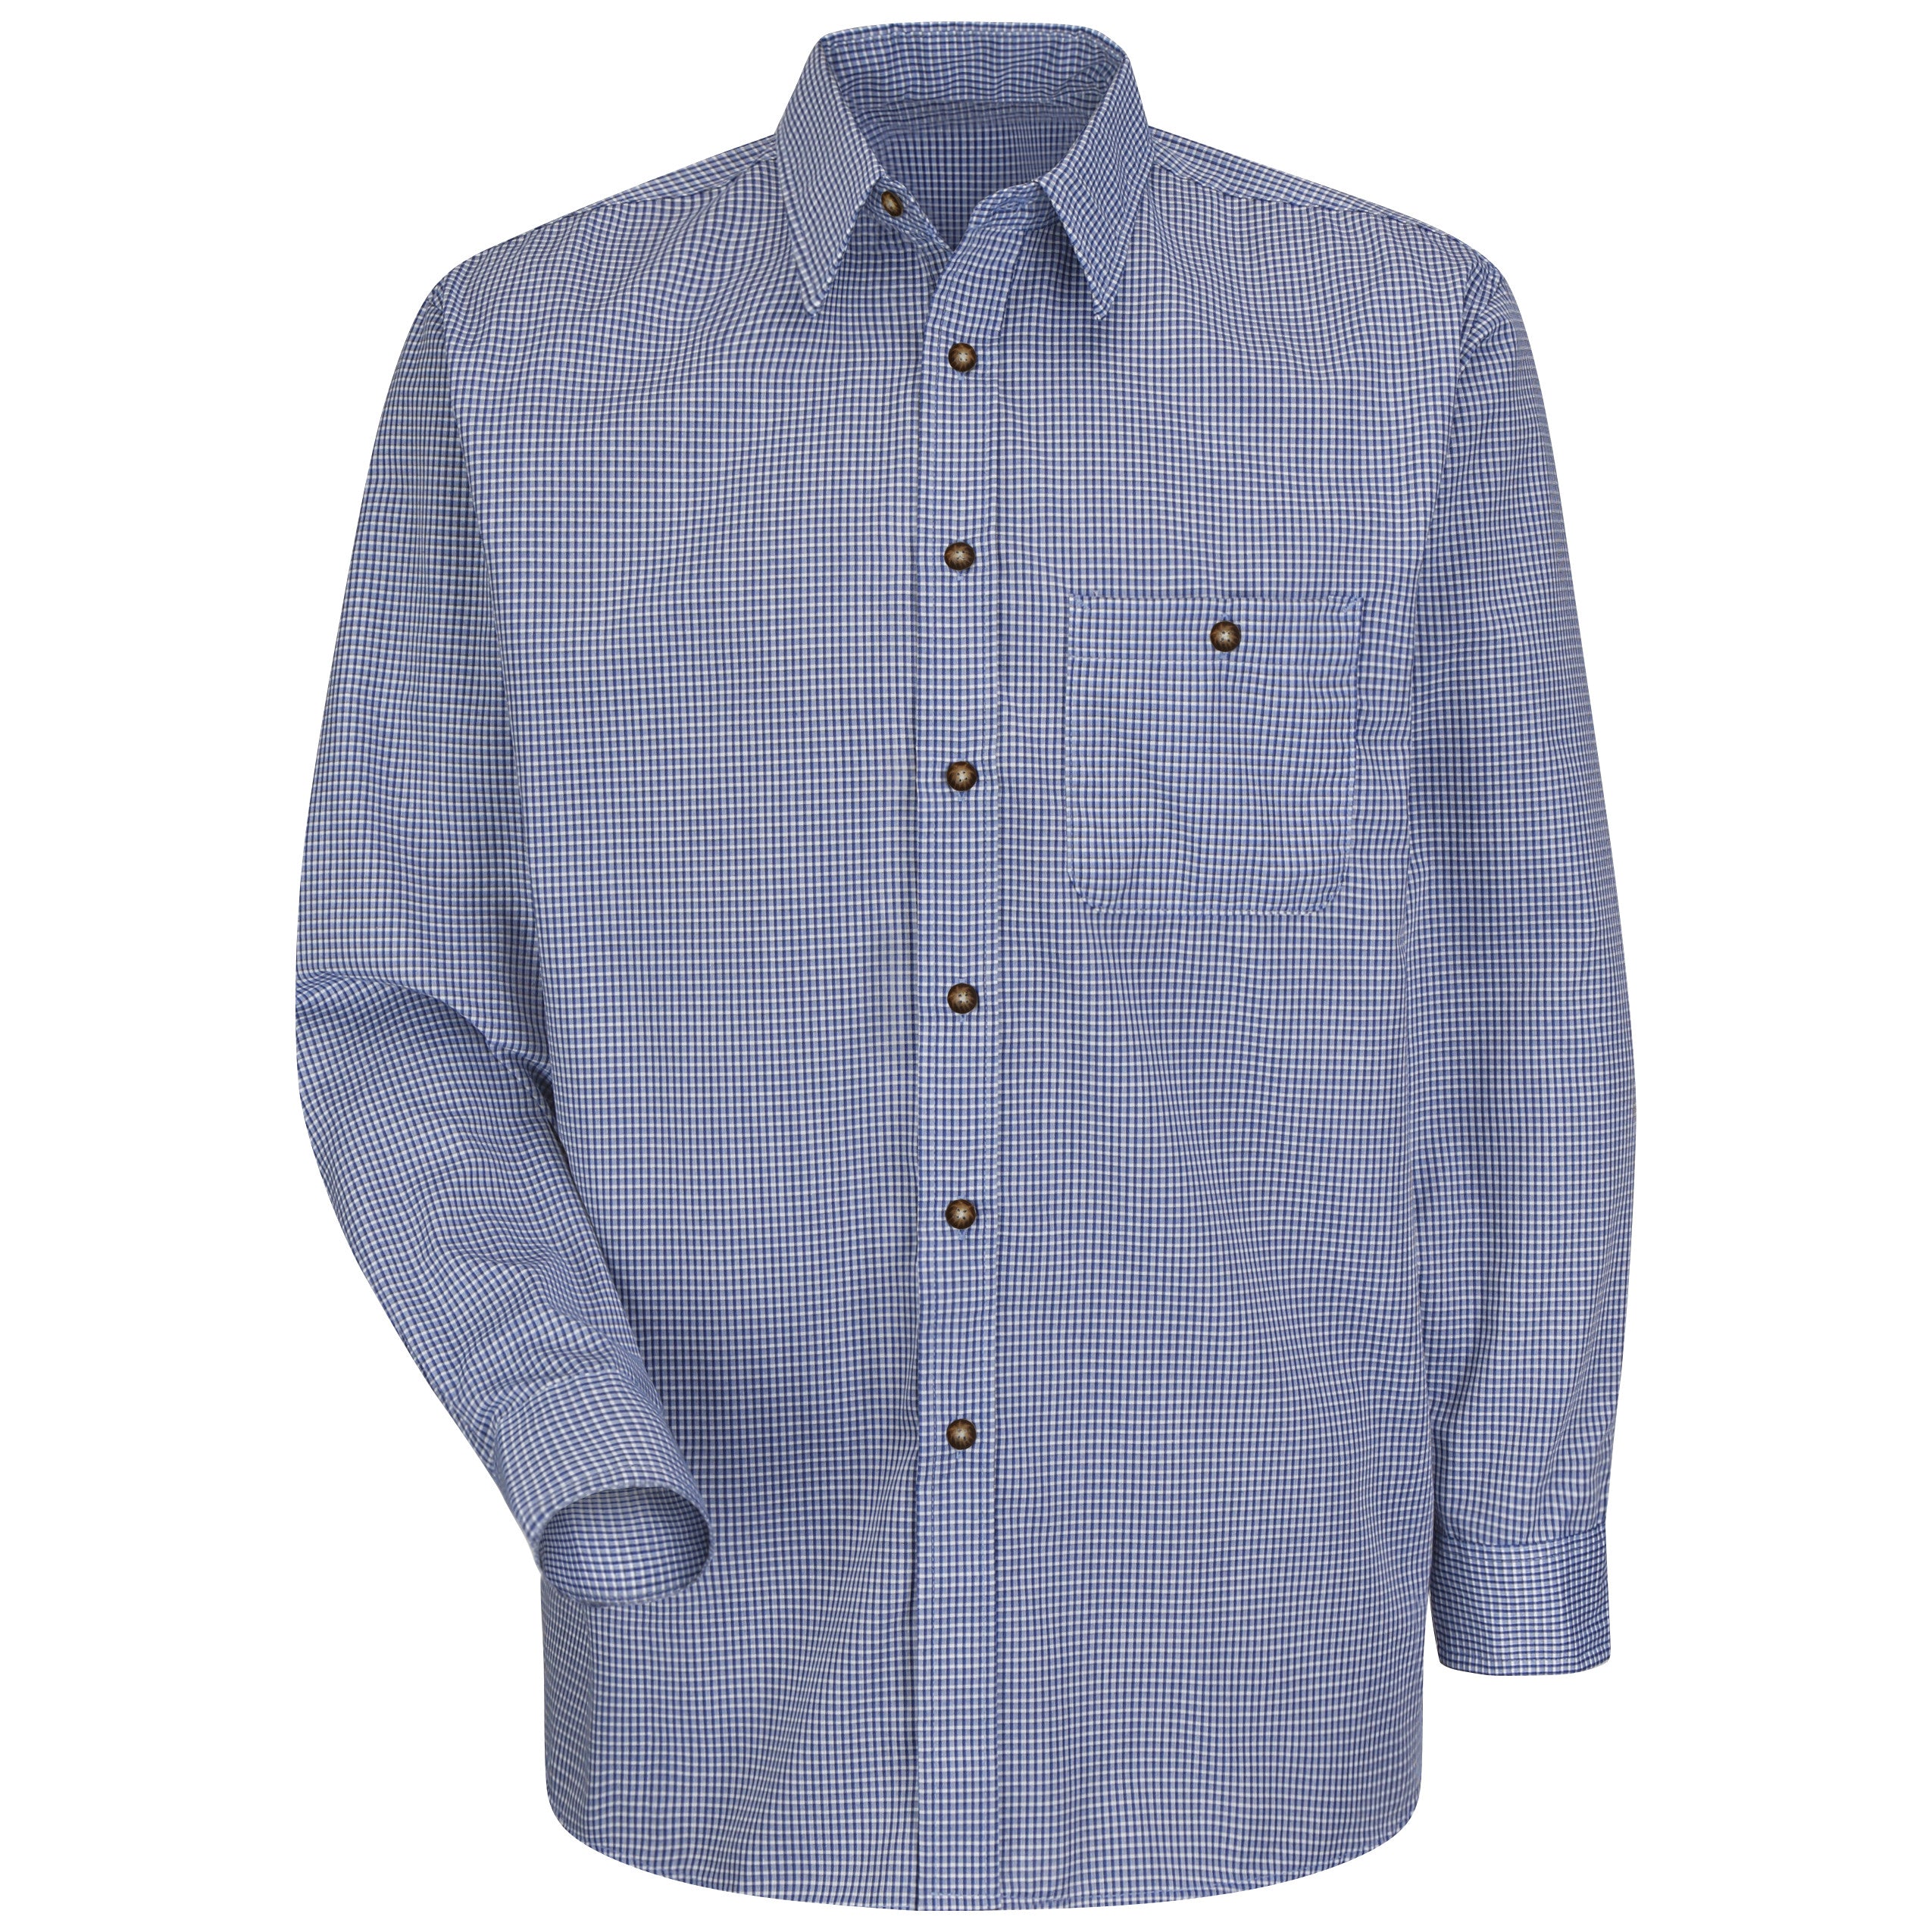 Men's Long Sleeve Mini-Plaid Uniform Shirt SP74 - White/Blue Mini Plaid-eSafety Supplies, Inc